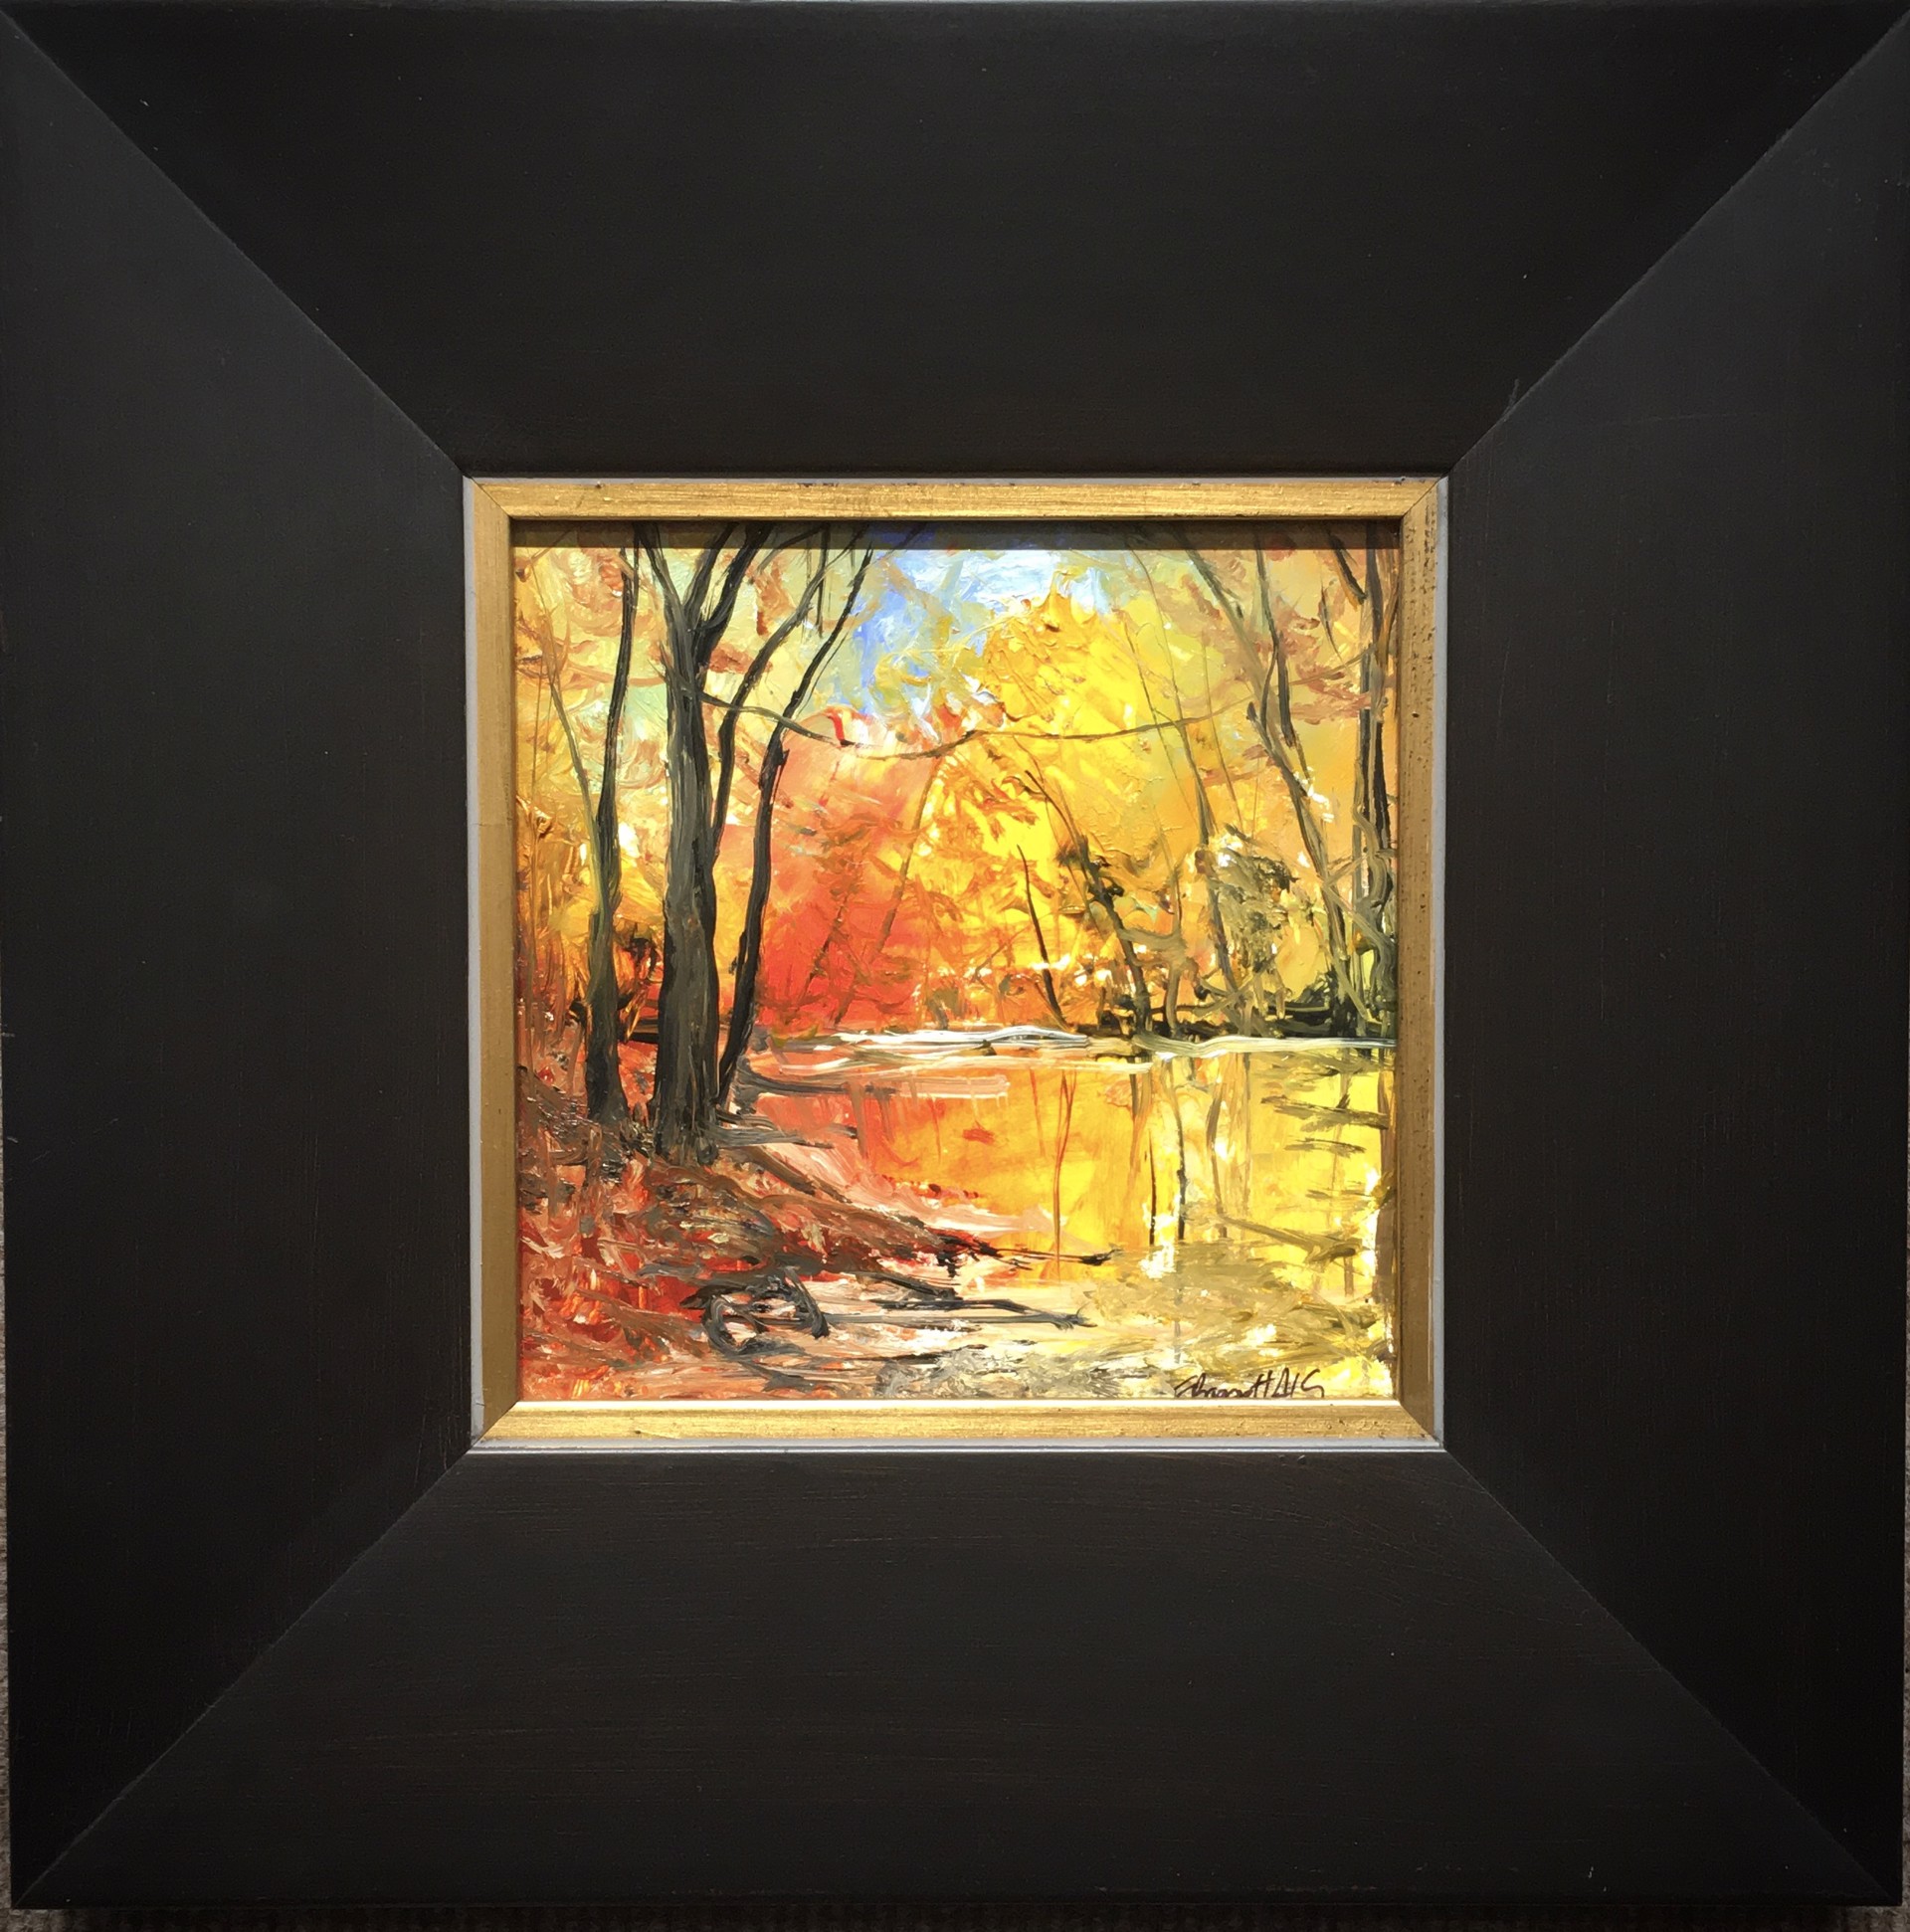 The Four Seasons - Fall by Frank Baggett